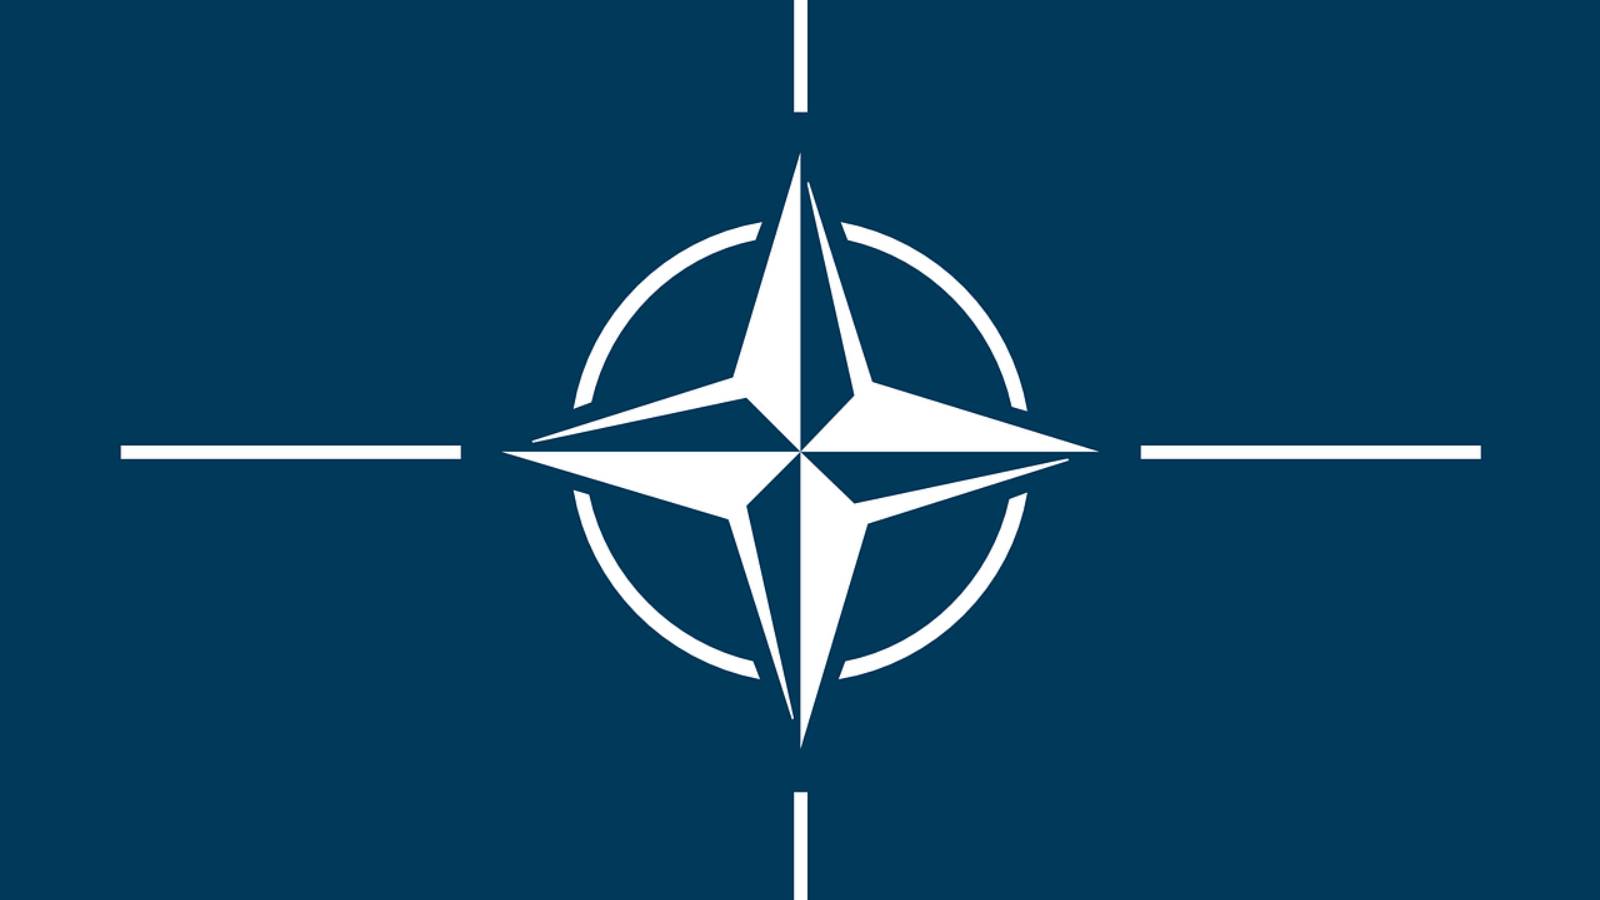 NATO Executa Exercitii Amploare Europa Ciuda Razboiului Ucraina